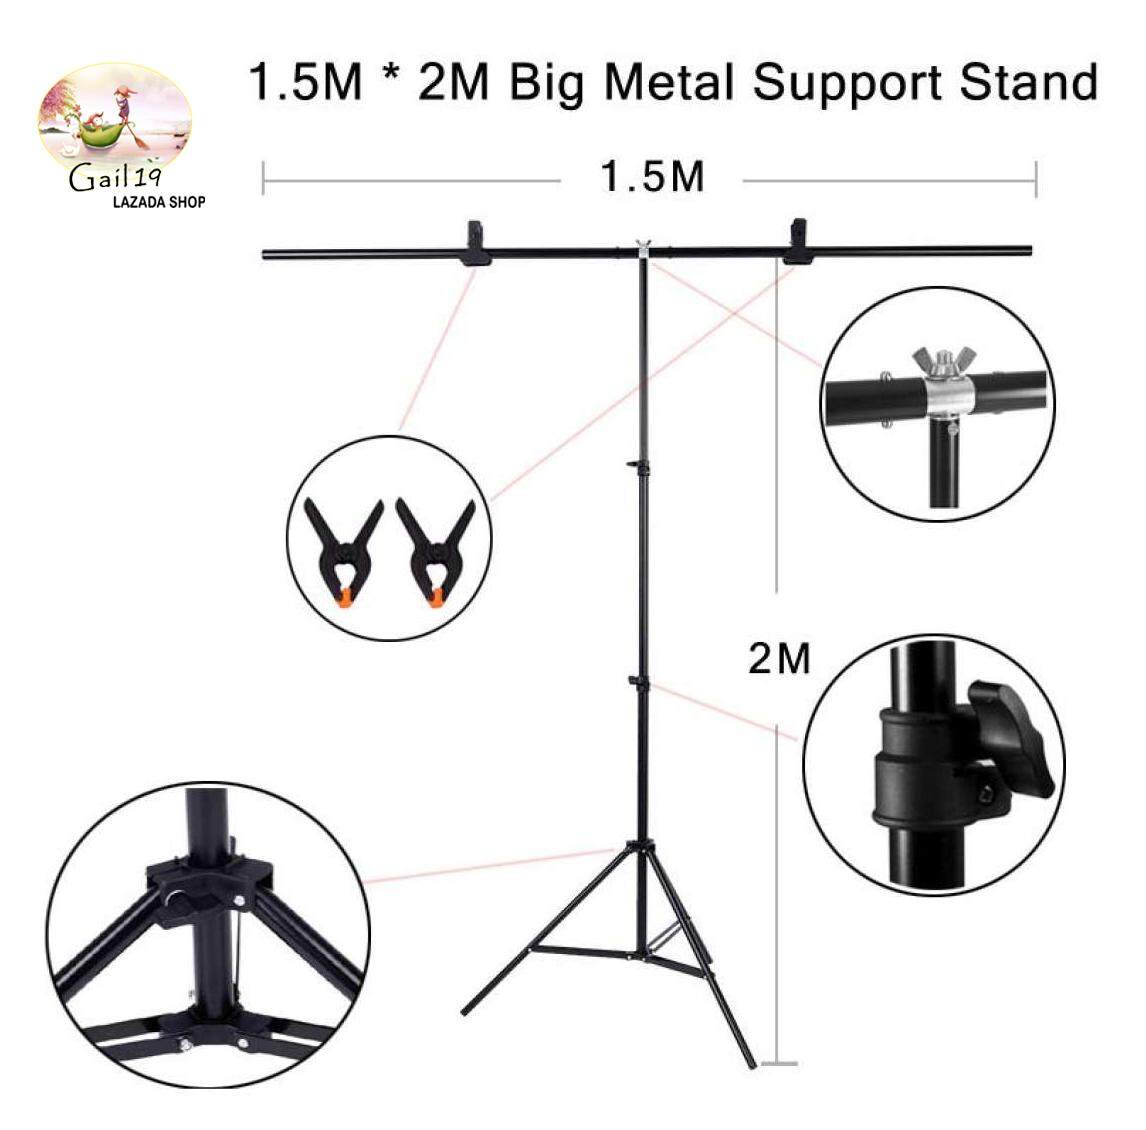 1.5M * 2M Big Photography Studio Video Metal Support Stand System Kit Set W/ Crossbar Clamps 2 * Clamps for PVC Backdrop Background ชุดกล้องถ่ายภาพขนาด 1.5เมตร * 2เมตร. รองรับแท่นวางเหล็กและปากกาจับ 2 * สำหรับ PVC ฉากหลัง